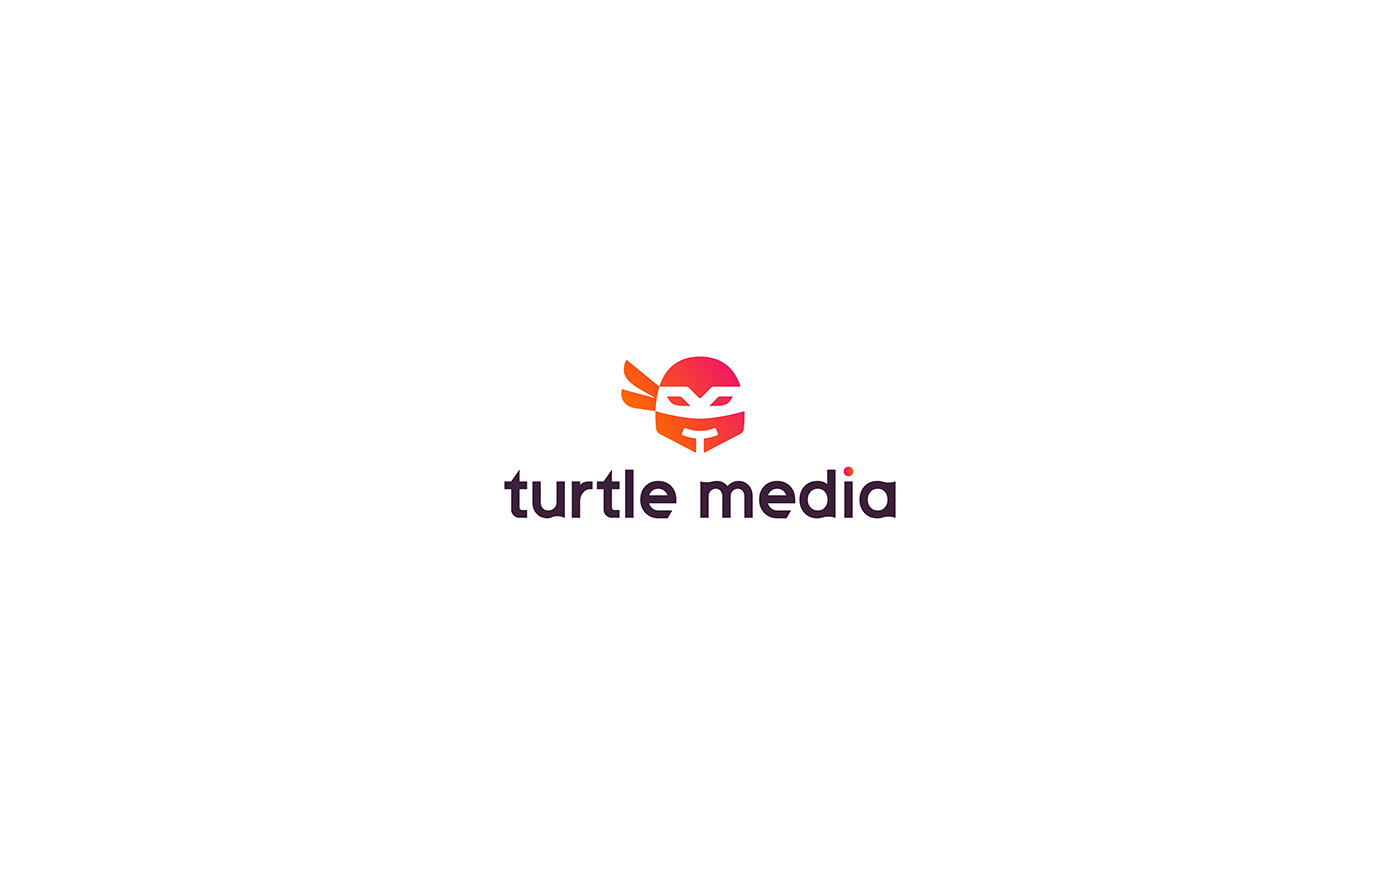 agency brand consulting brand identity branding  digital marketing agency marketing agency media Ninja Turtles social media marketing tutrle